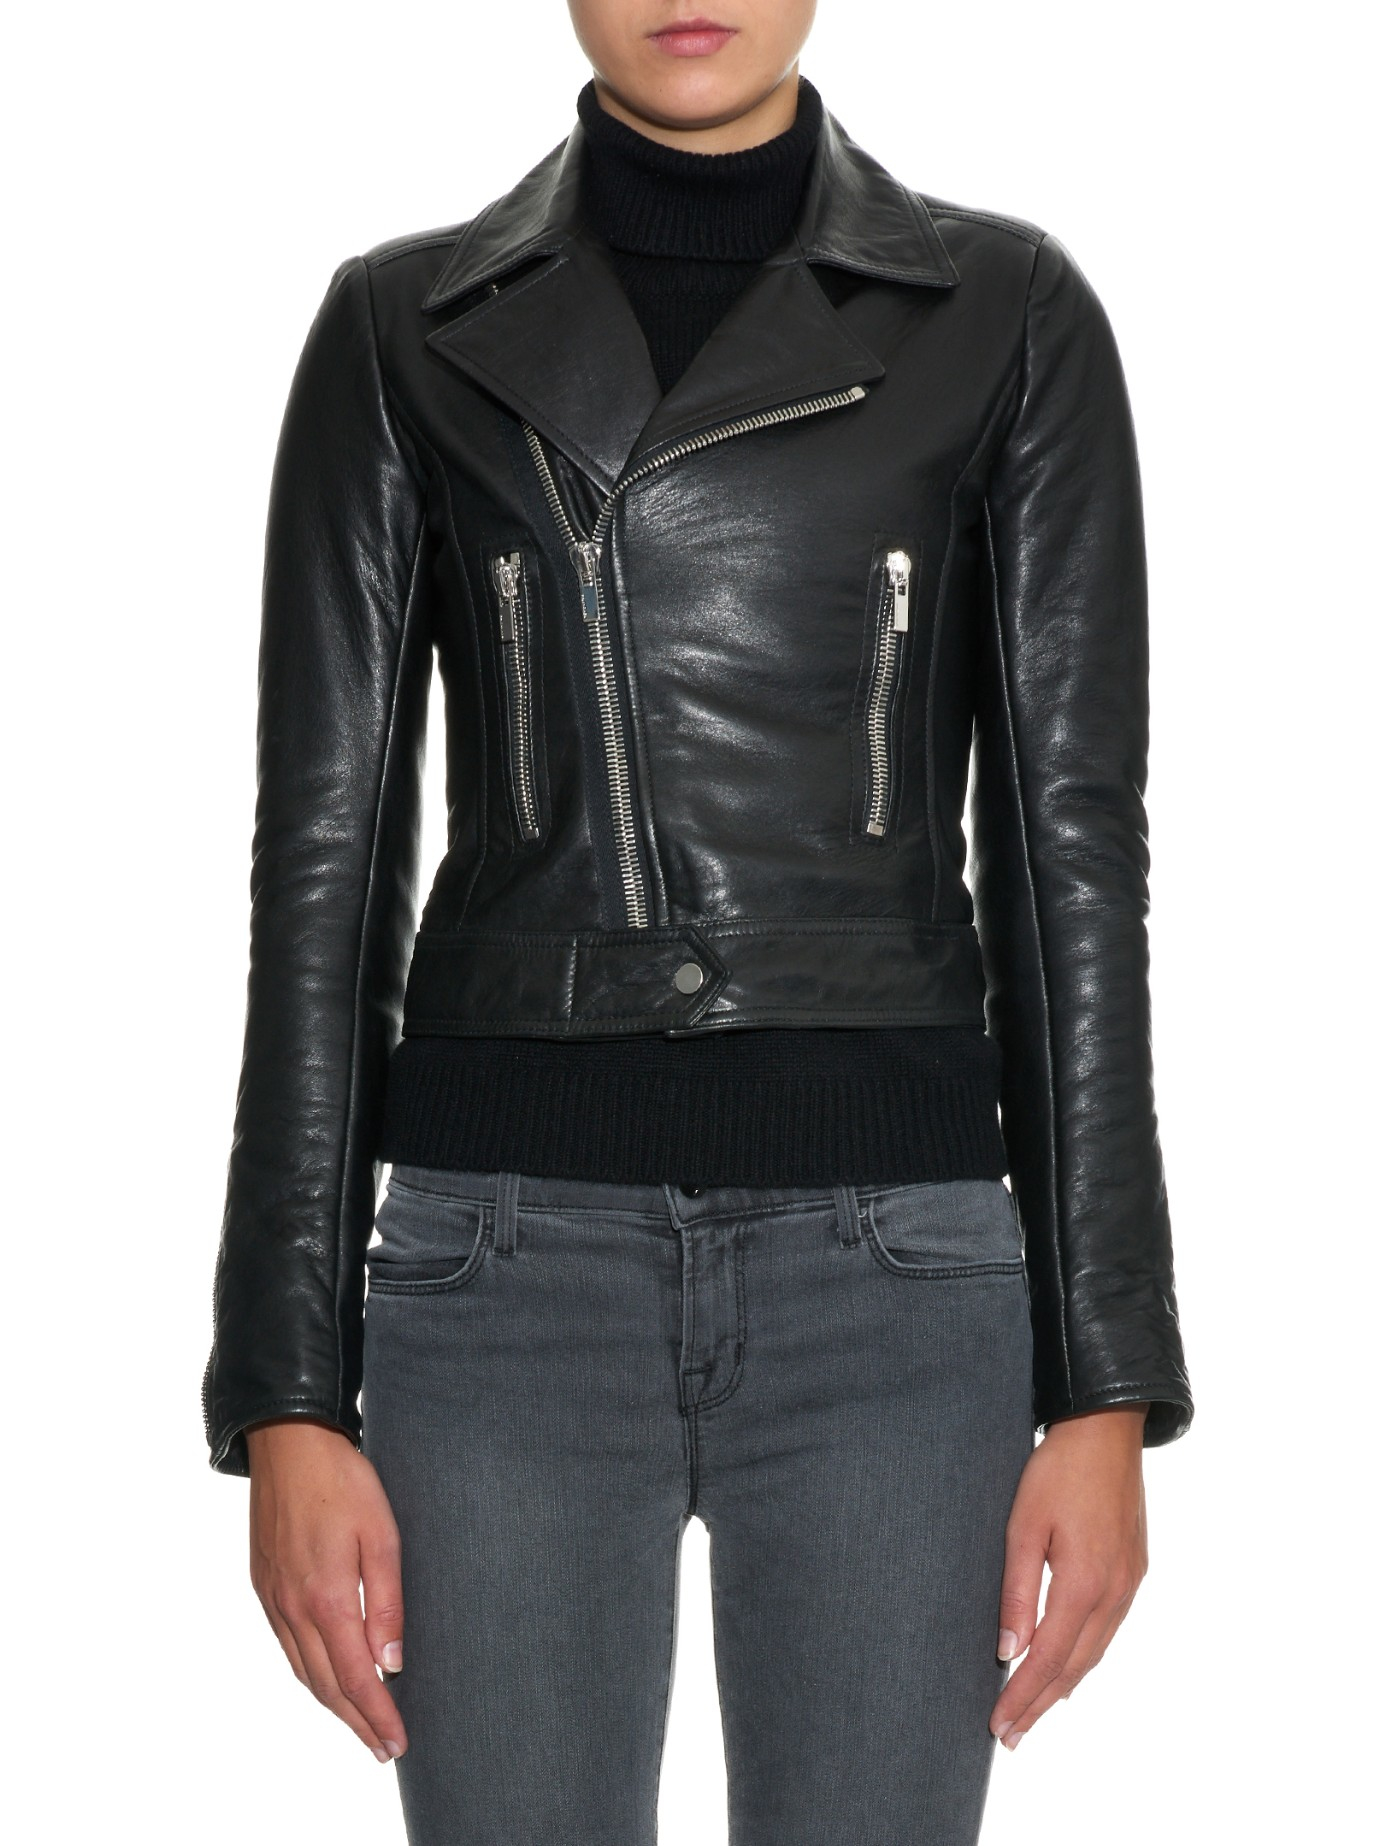 balenciaga leather motorcycle jacket